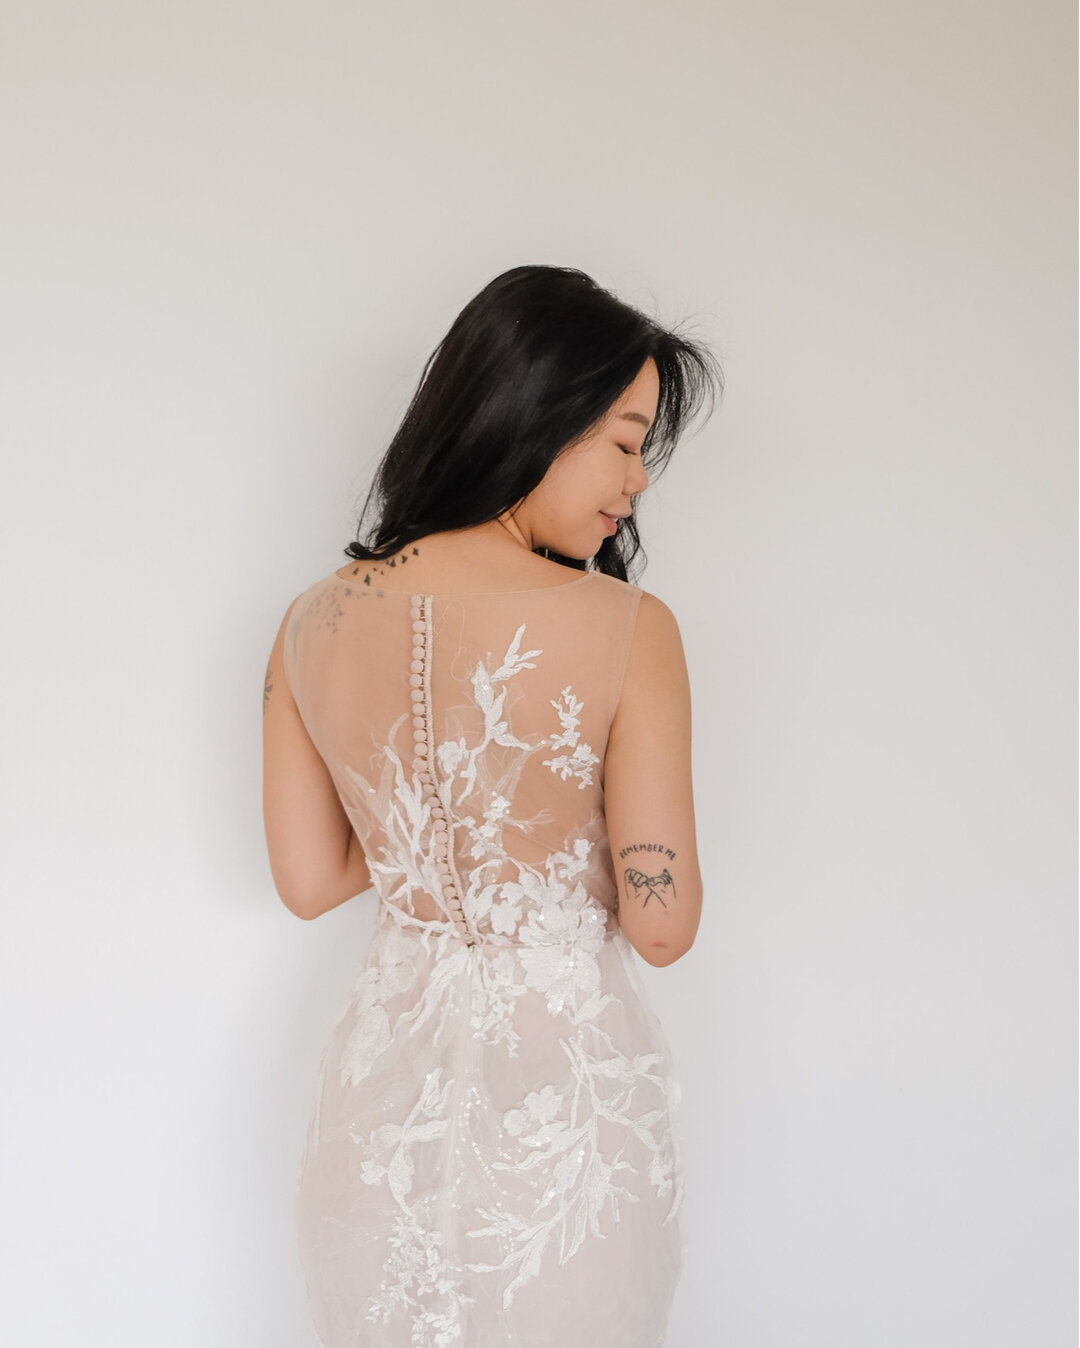 We love a good back detail. A great BACK impression 😛⠀⠀⠀⠀⠀⠀⠀⠀⠀
.⠀⠀⠀⠀⠀⠀⠀⠀⠀
.⠀⠀⠀⠀⠀⠀⠀⠀⠀
.⠀⠀⠀⠀⠀⠀⠀⠀⠀
#details #backdetails #bridalgowns #weddingsinsingapore #bridetobe #bloomingbride #sgbrides #bridetobe #sghmua #plussize #bridalboutique #fitteddress #bu